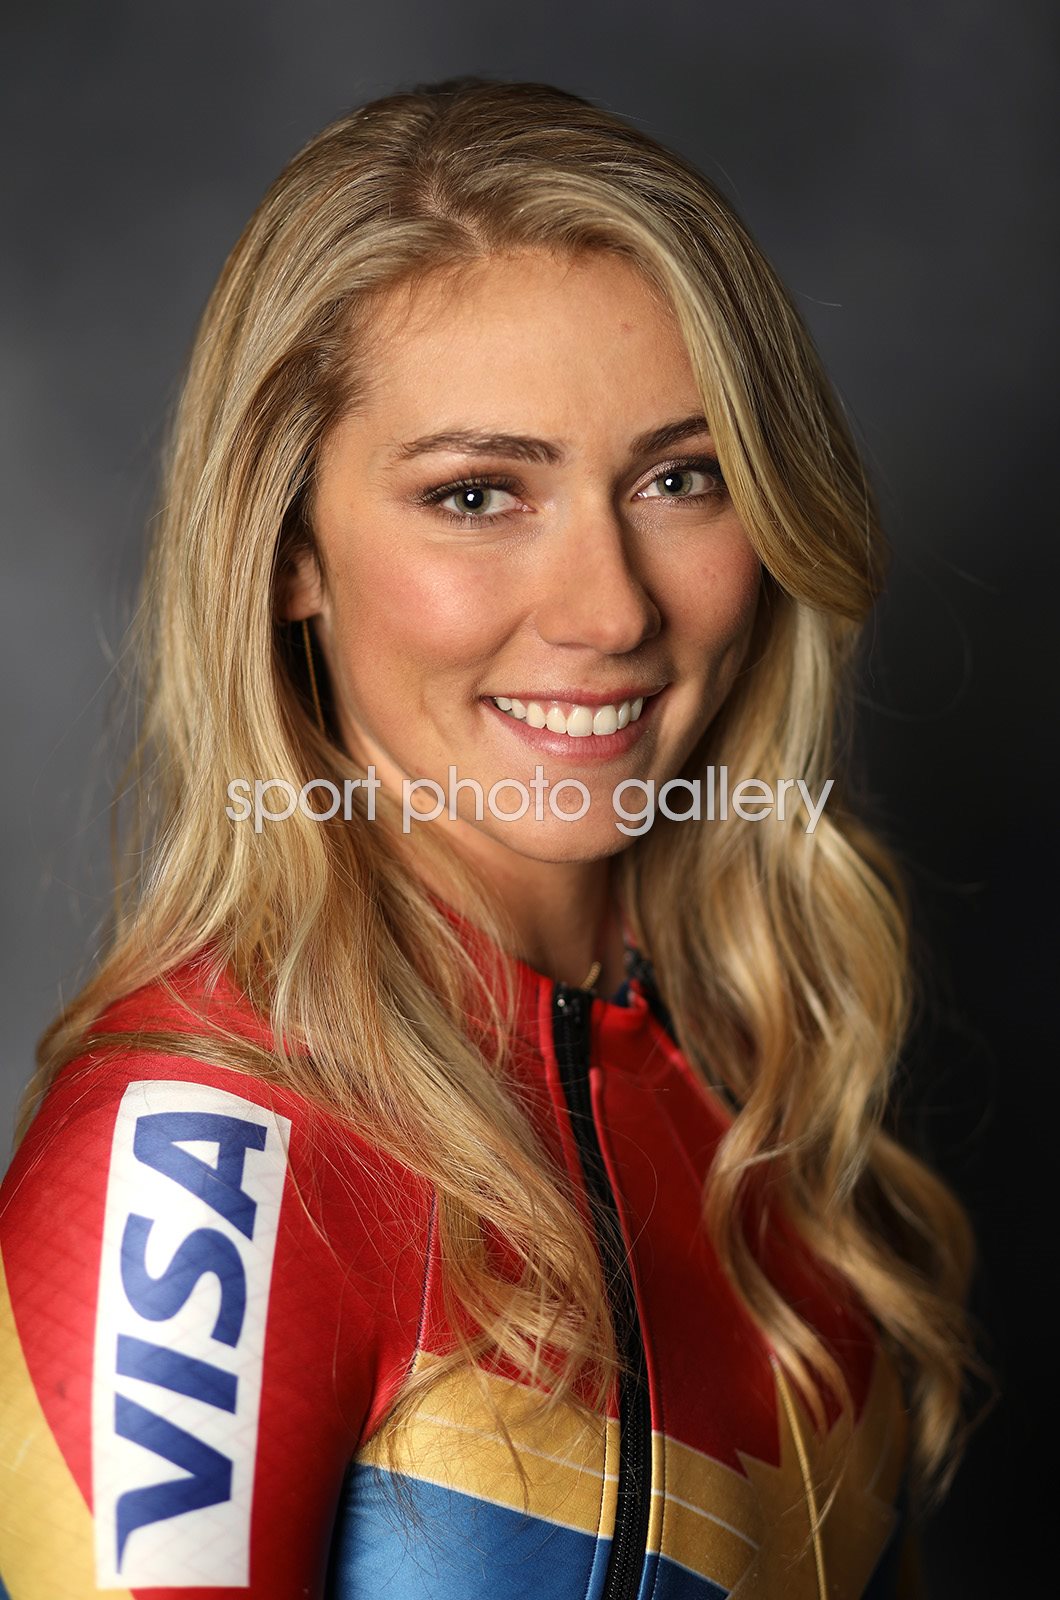 Mikaela Shiffrin Team USA portrait 2018 Print | Skiing Posters ...